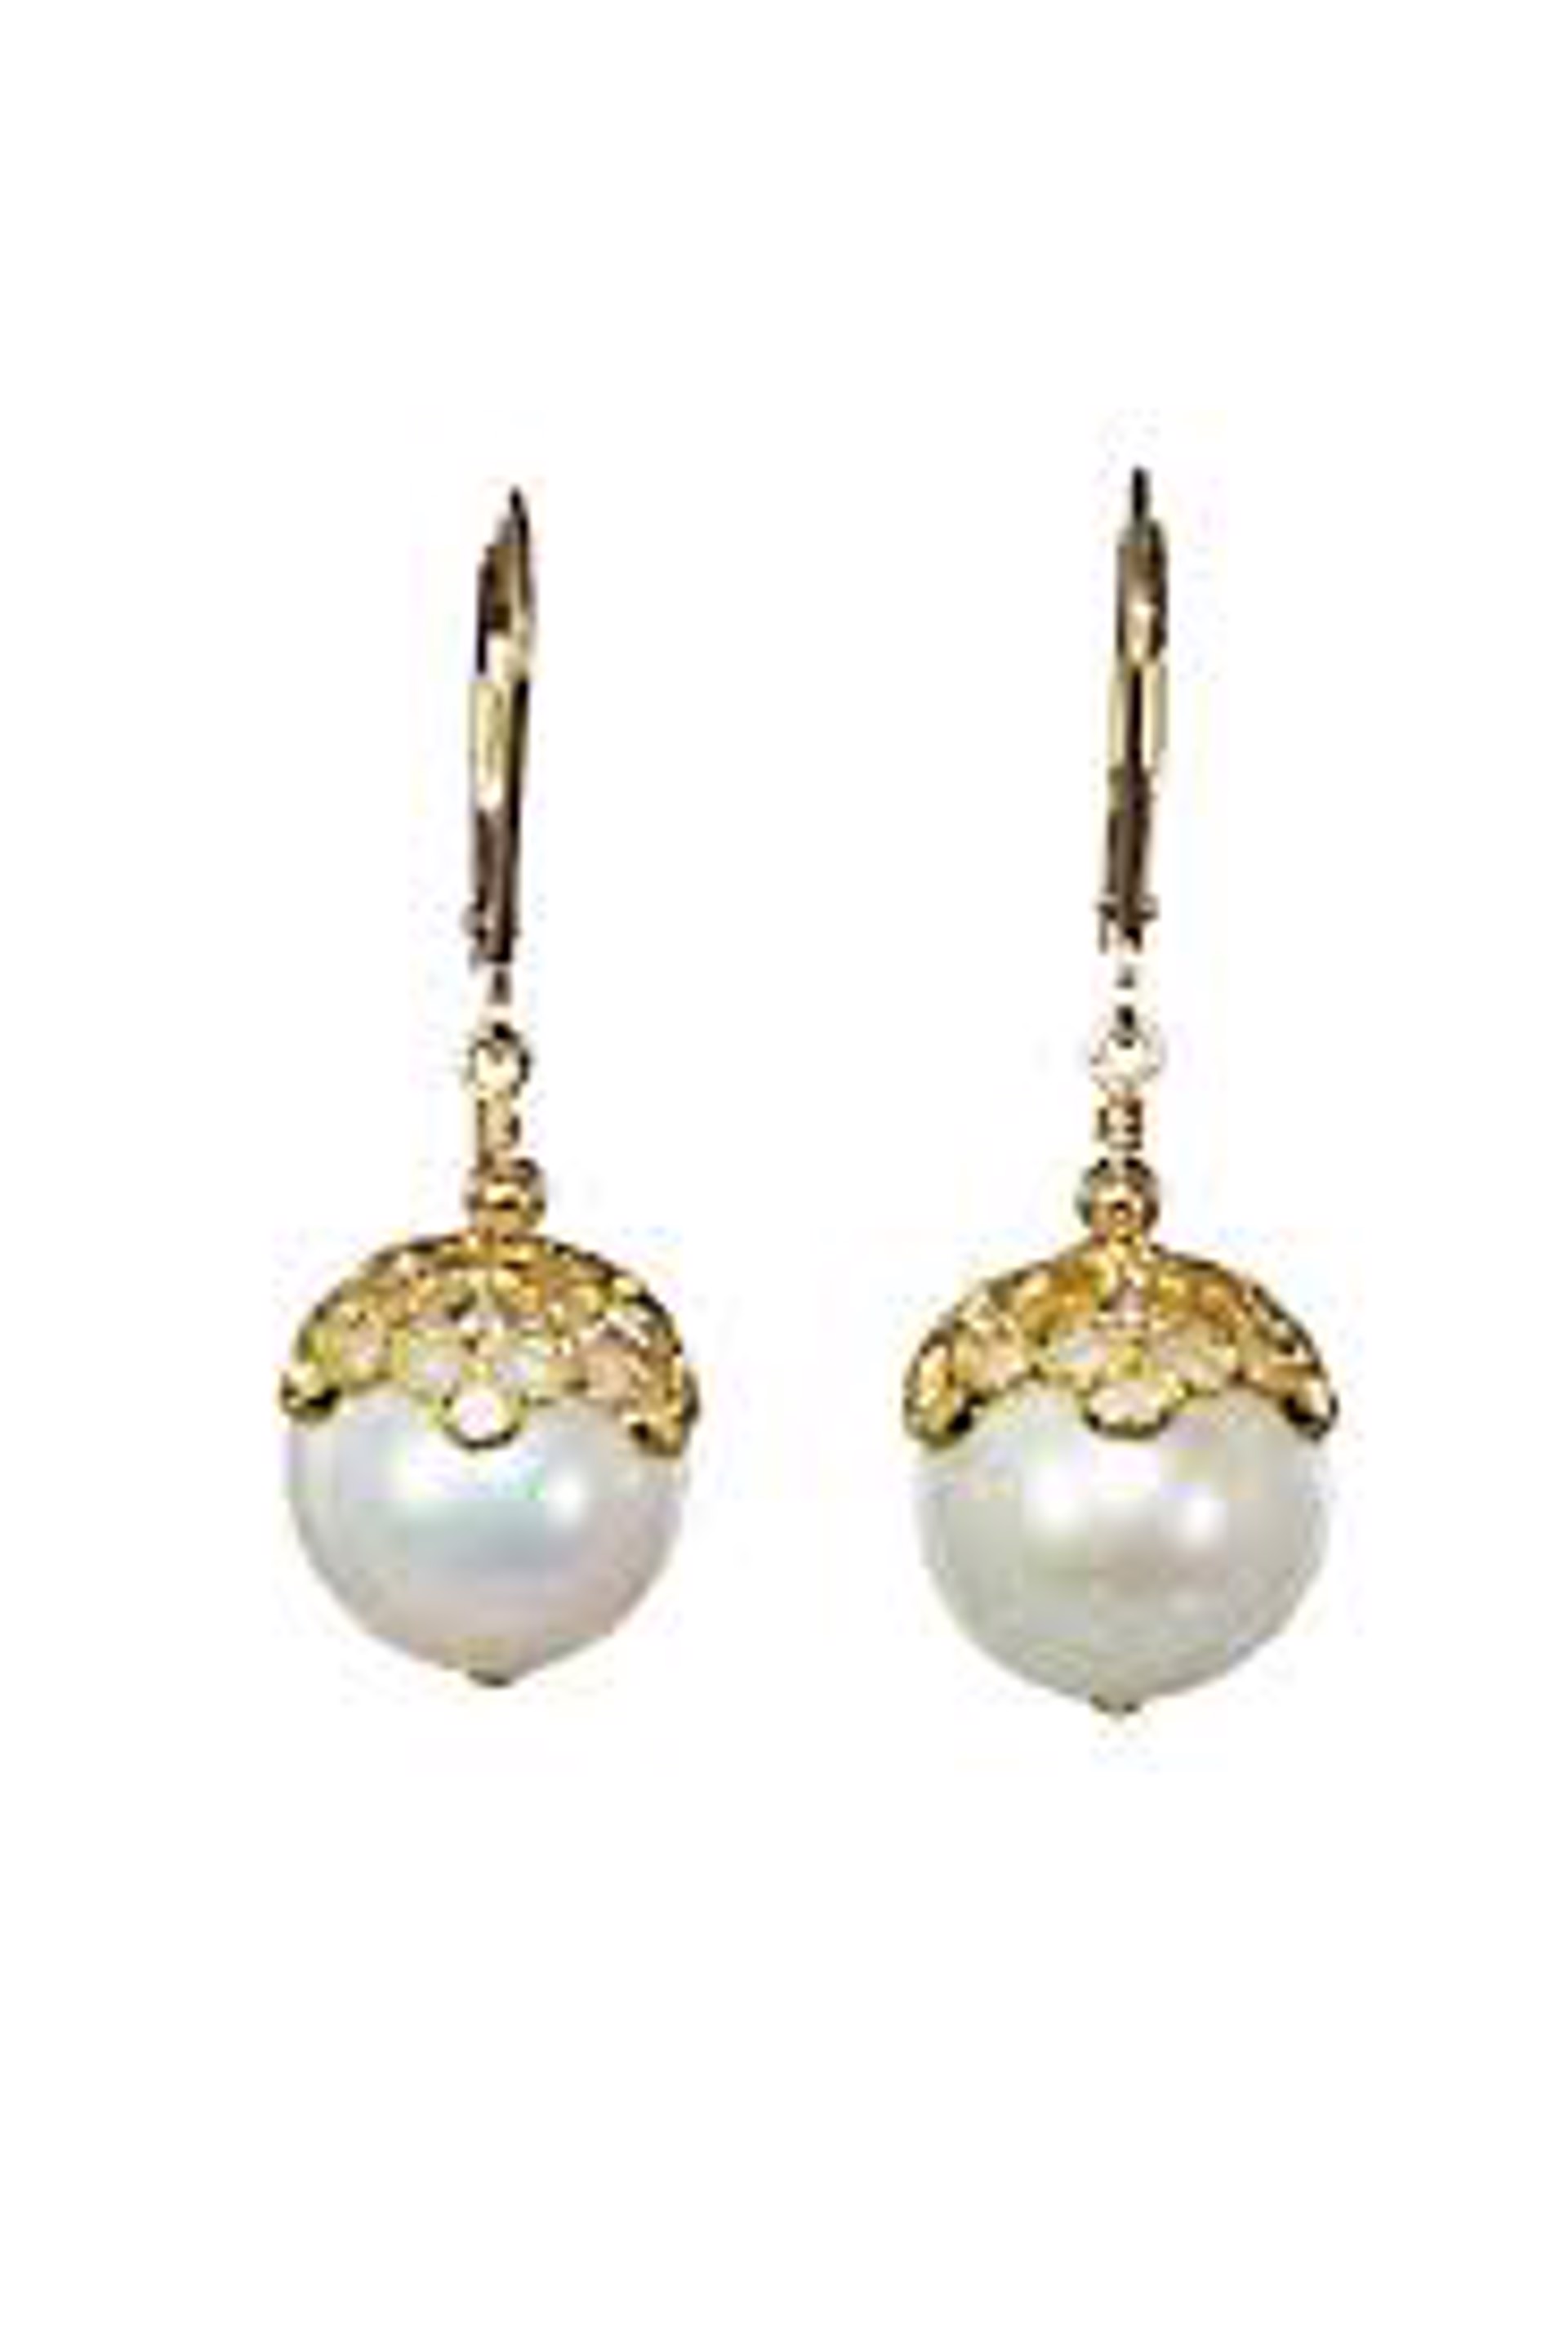 Ivory pearl huggies (small) by Melinda Lawton Jewelry